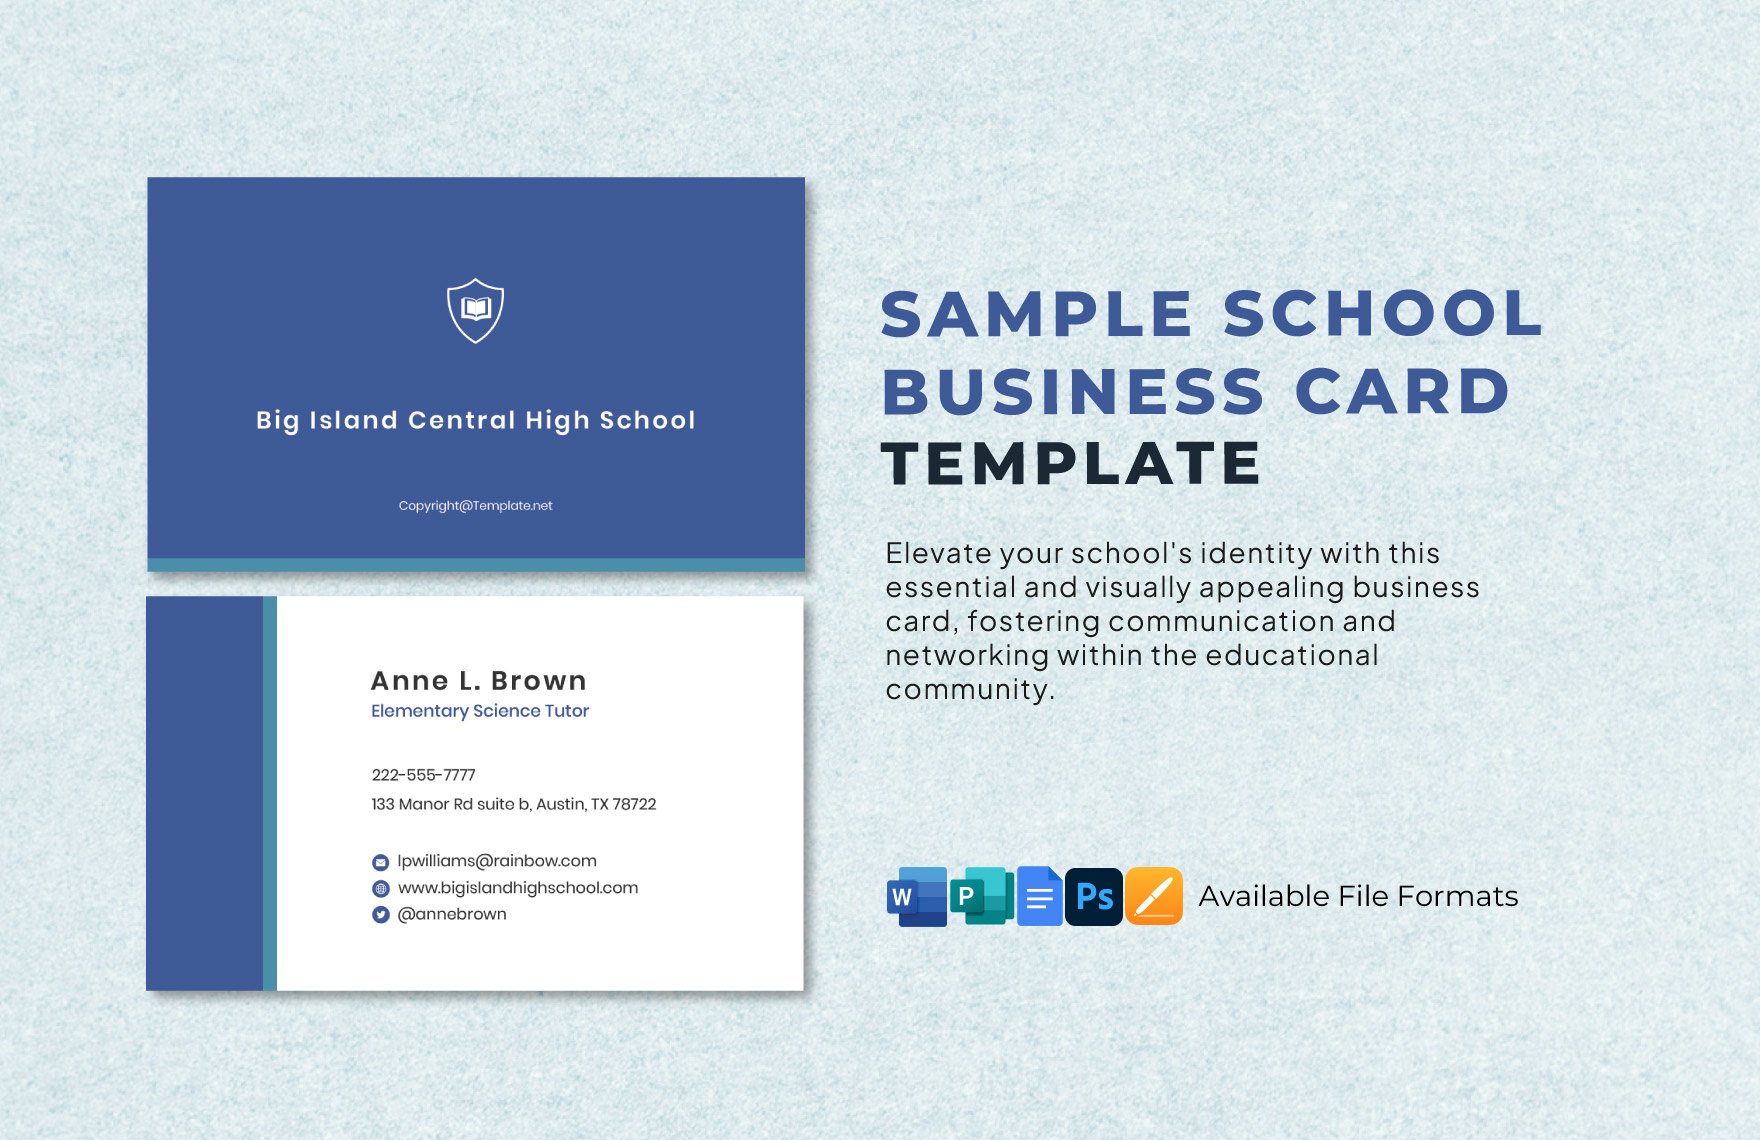 Sample School Business Card Template